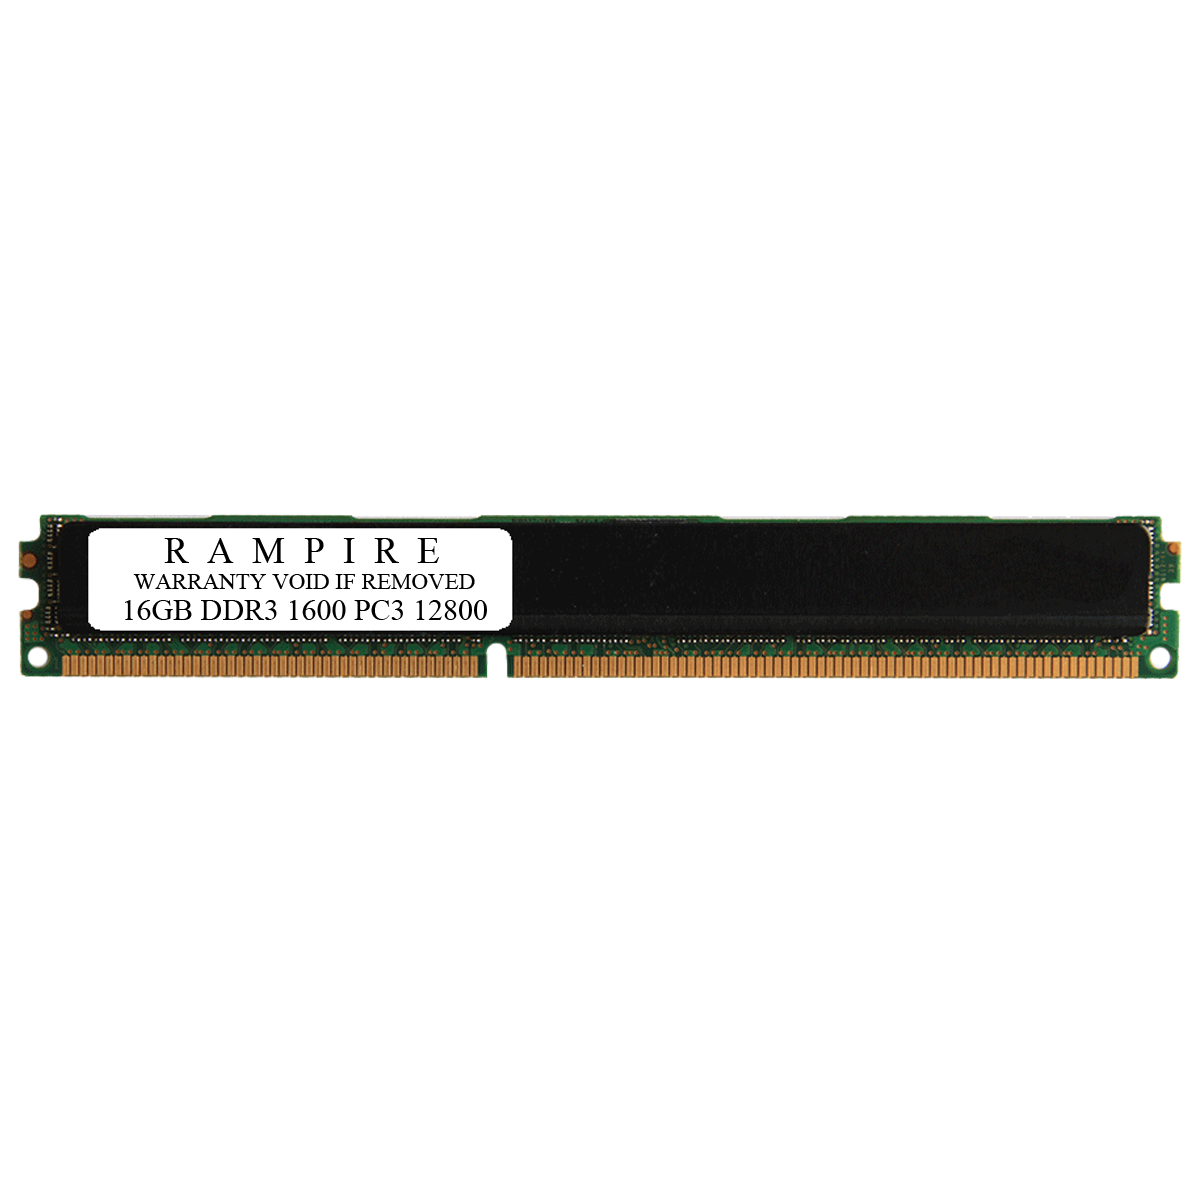 RAMPIRE 16GB DDR3 1600 (PC3 12800) 240-Pin SDRAM 2Rx4 VLP (Low Profile) 1.35V ECC Registered Server Memory